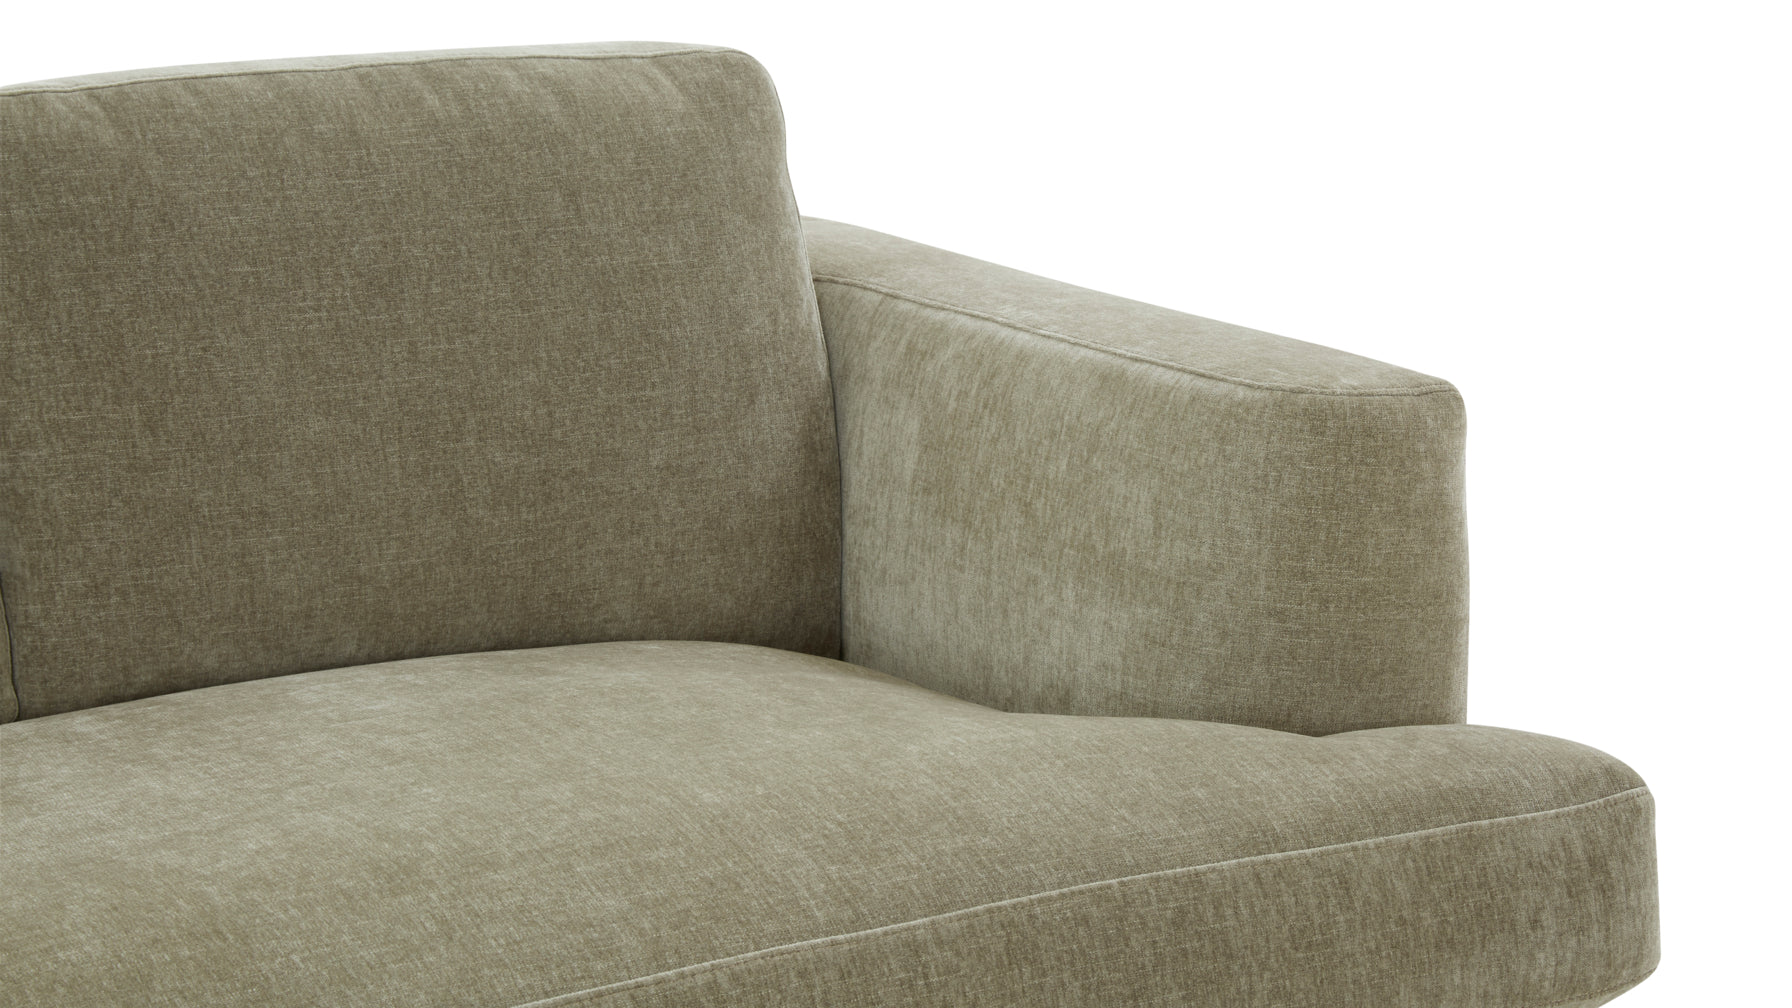 Good Company Sofa, 2 Seater, Artichoke - Image 5